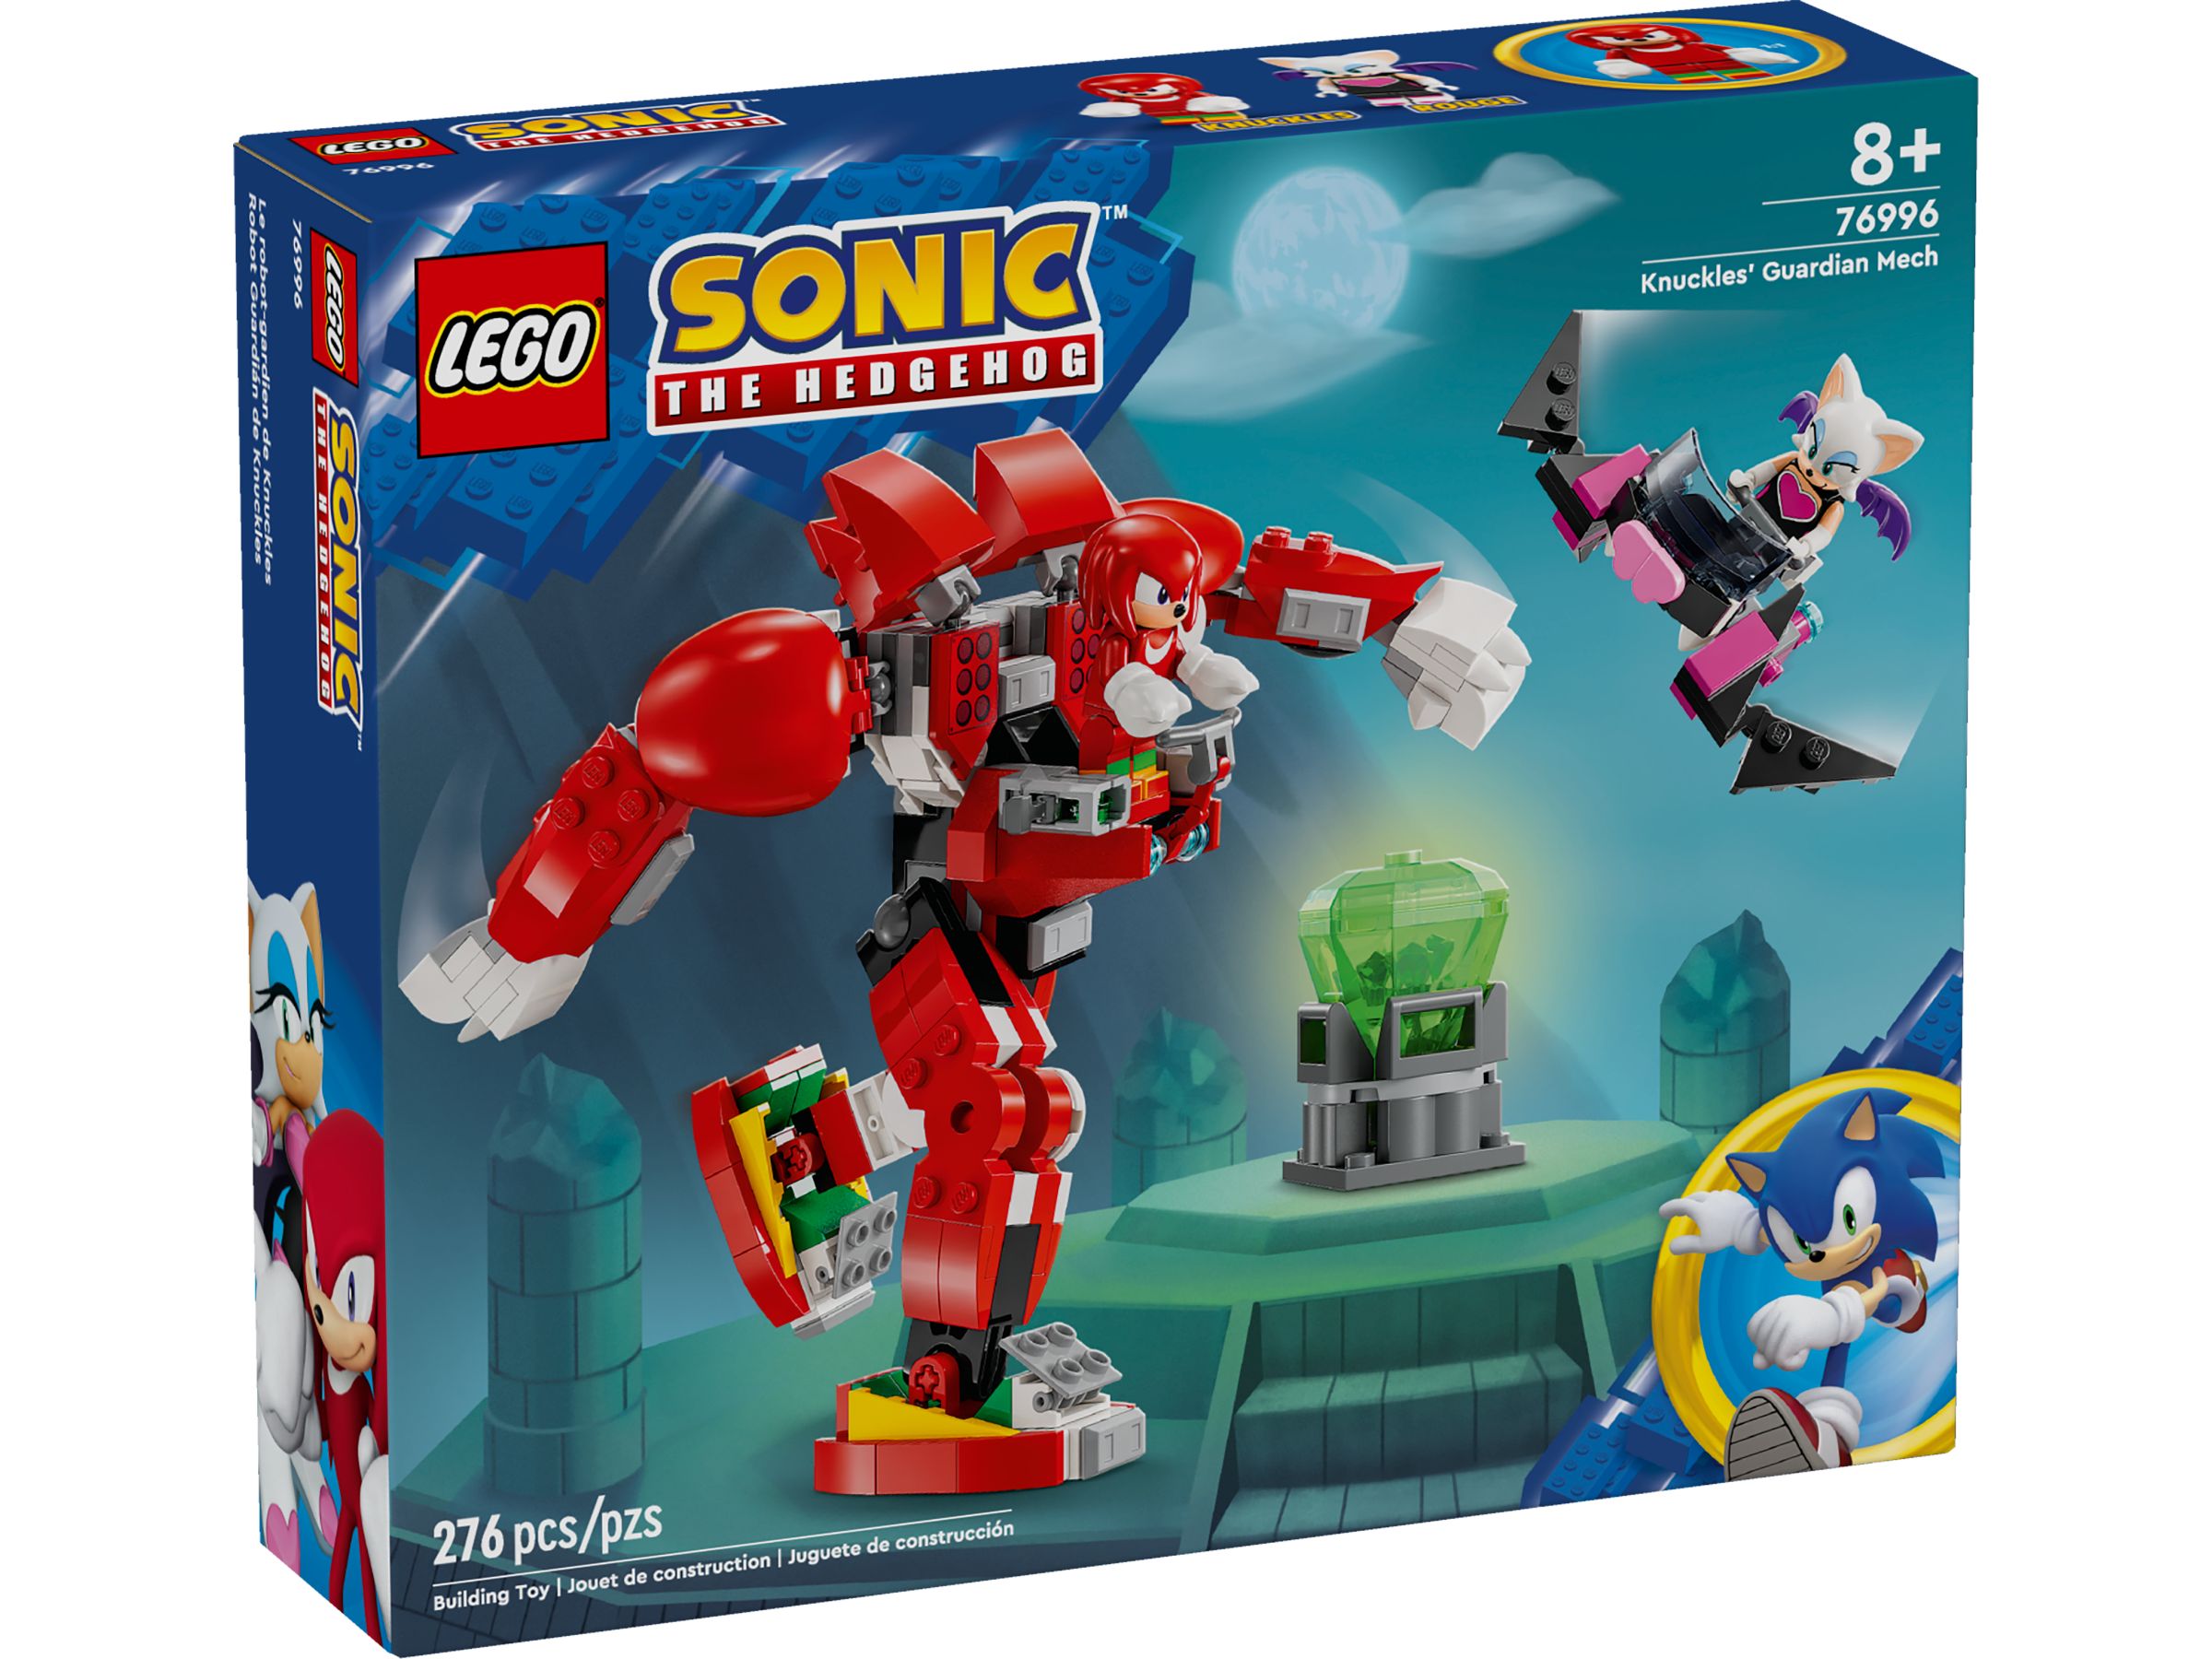 LEGO Sonic the Hedgehog 76996 Knuckles' Wächter-Mech LEGO_76996_Box1_v39.jpg